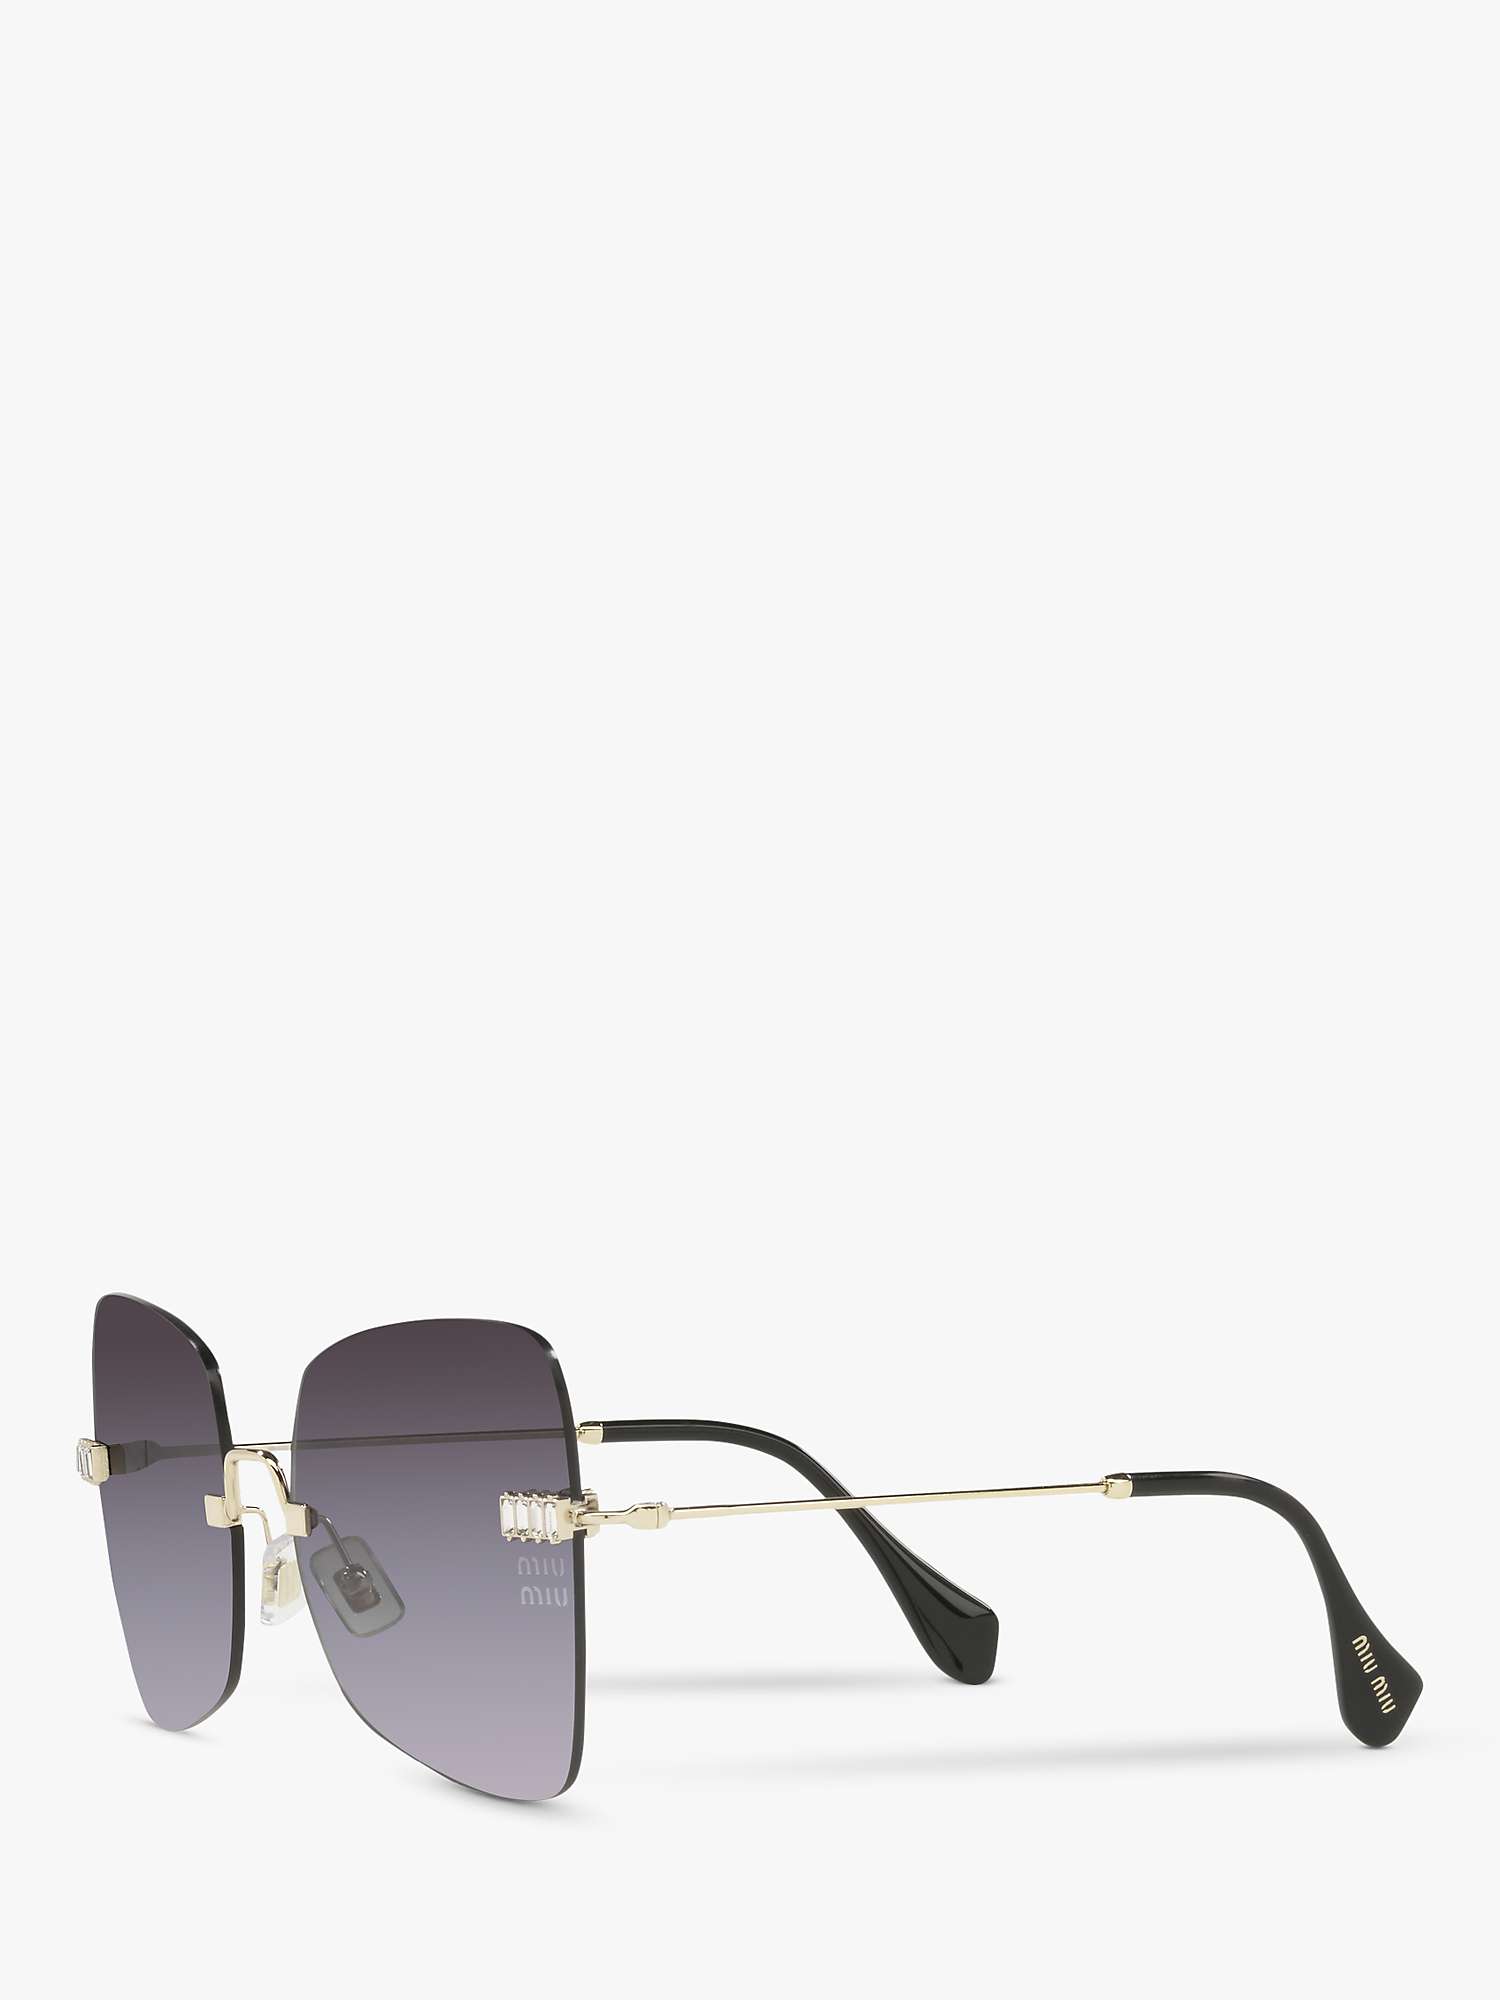 Buy Miu Miu MU 50WS Women's Irregular Sunglasses, Pale Gold/Black Gradient Online at johnlewis.com